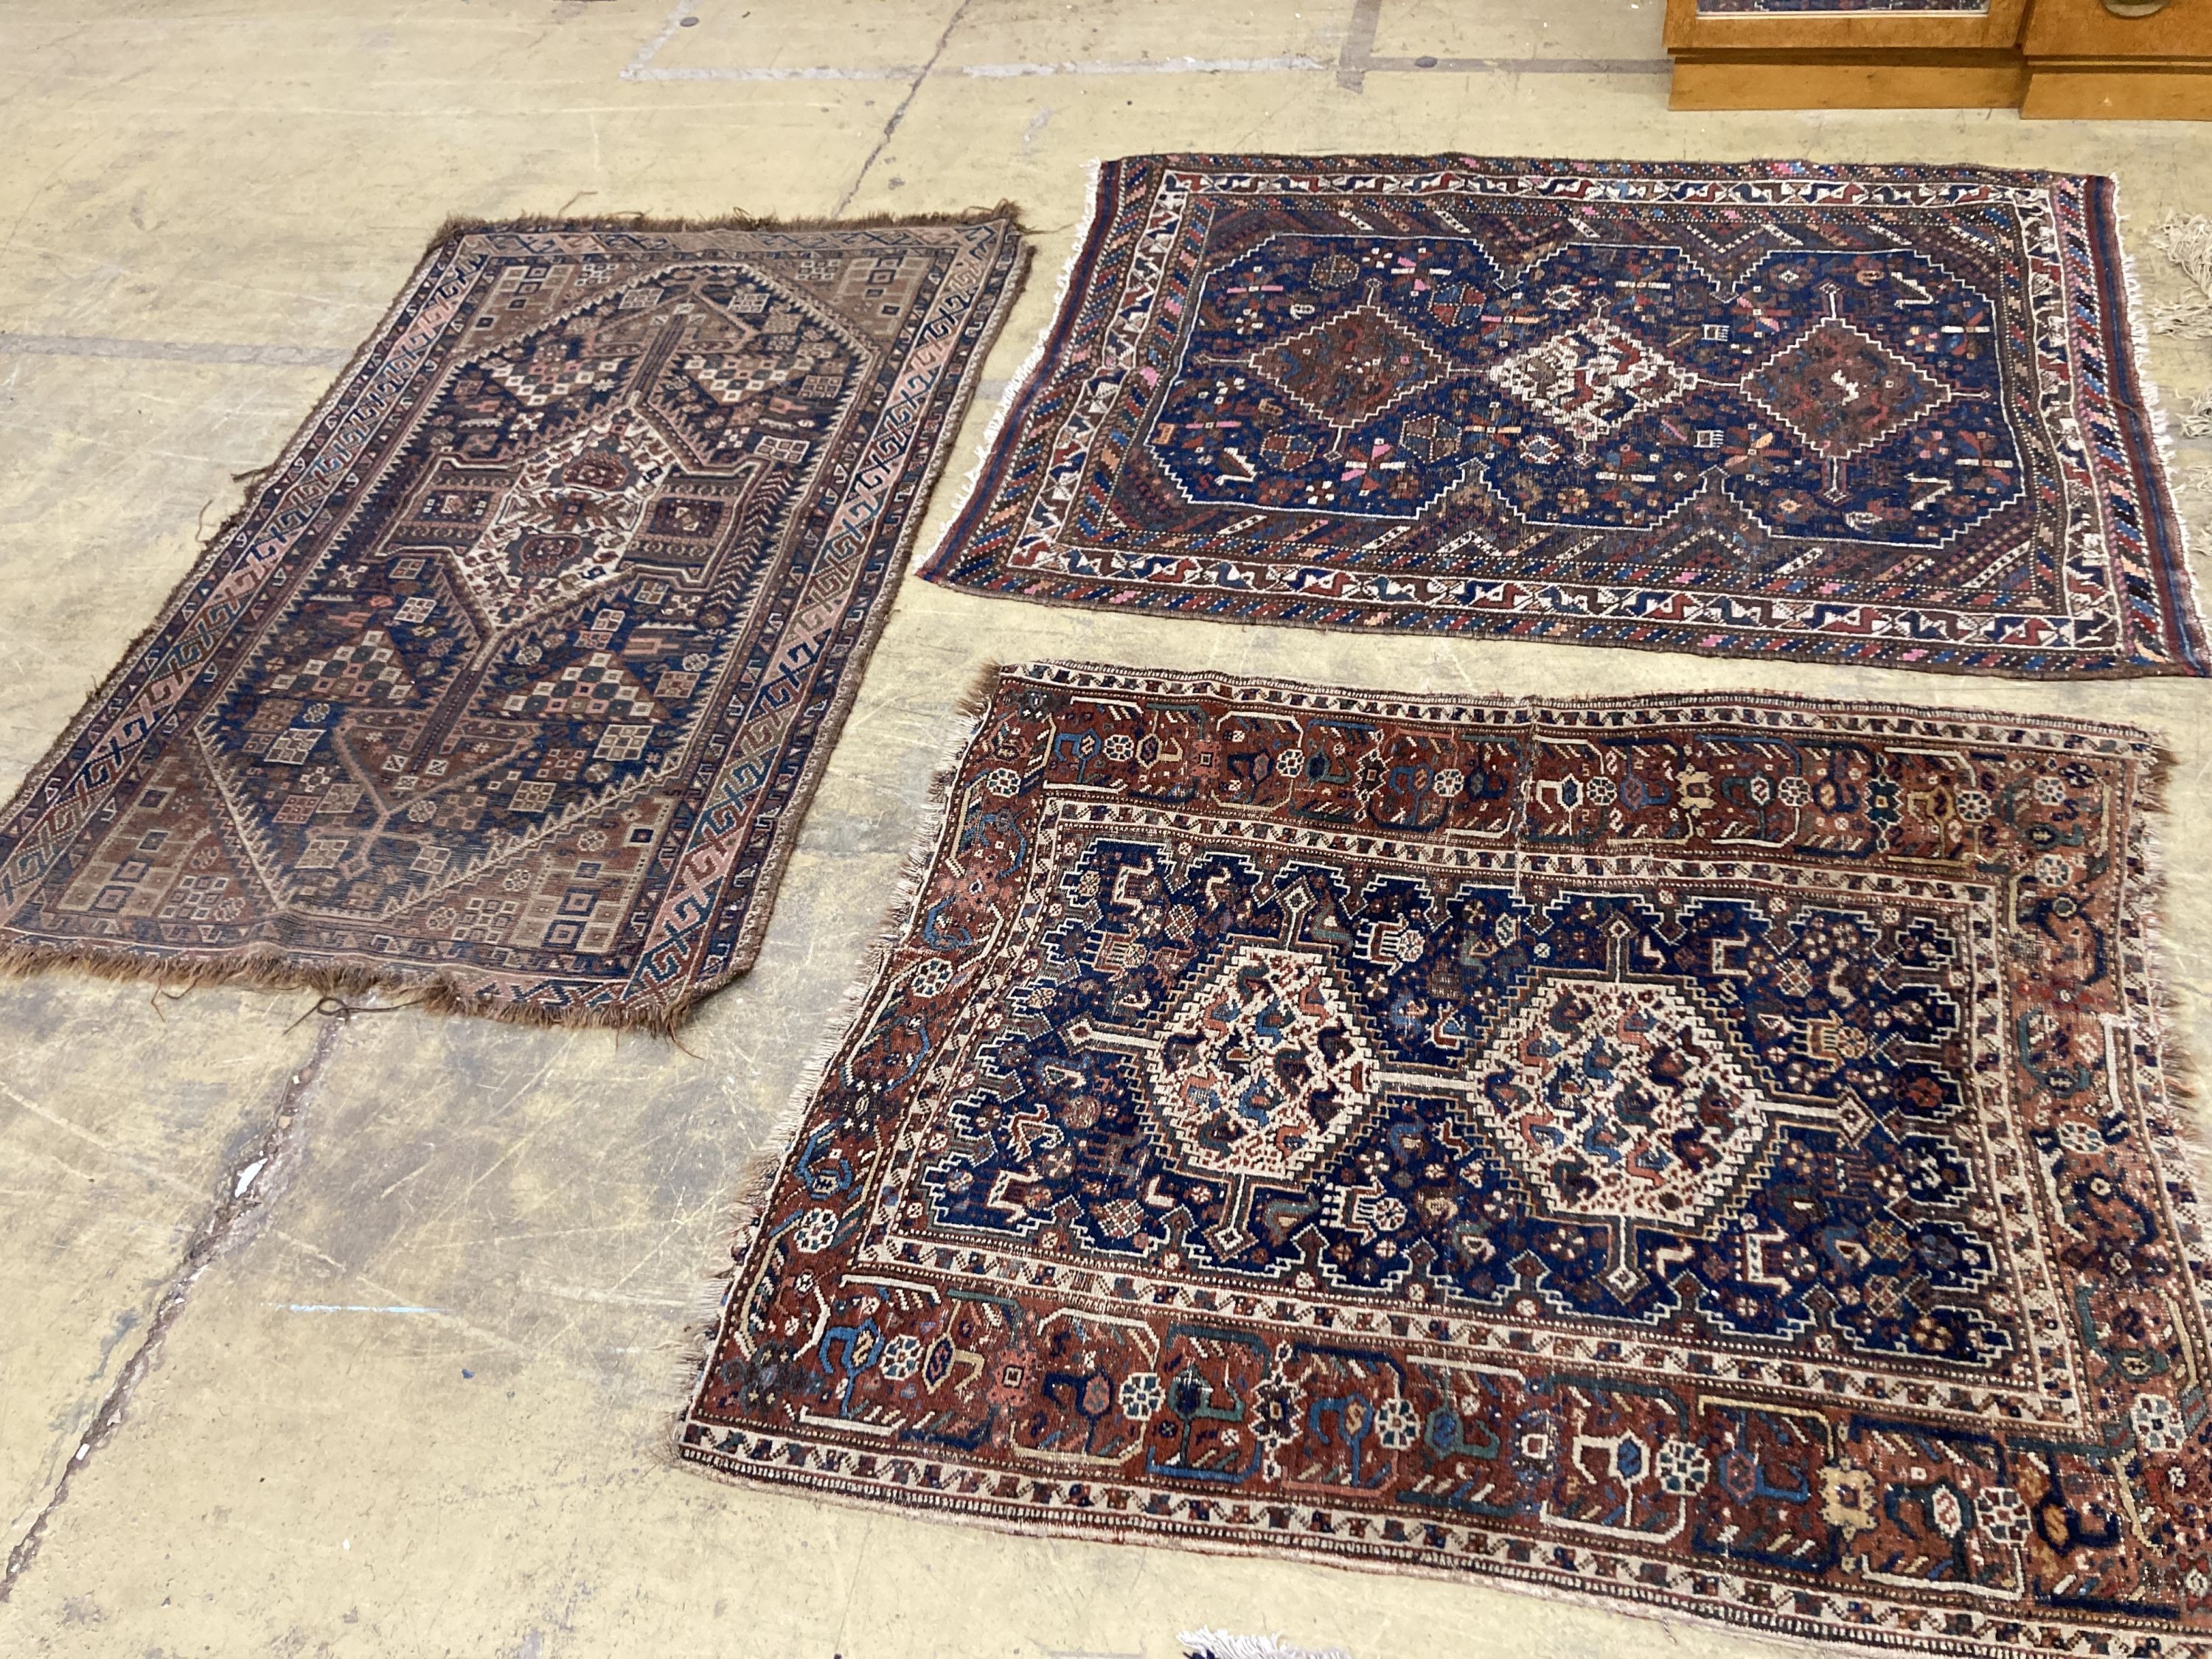 Three antique Caucasian blue ground rugs, largest 154 x 114 cms.                                                                                                                                                            